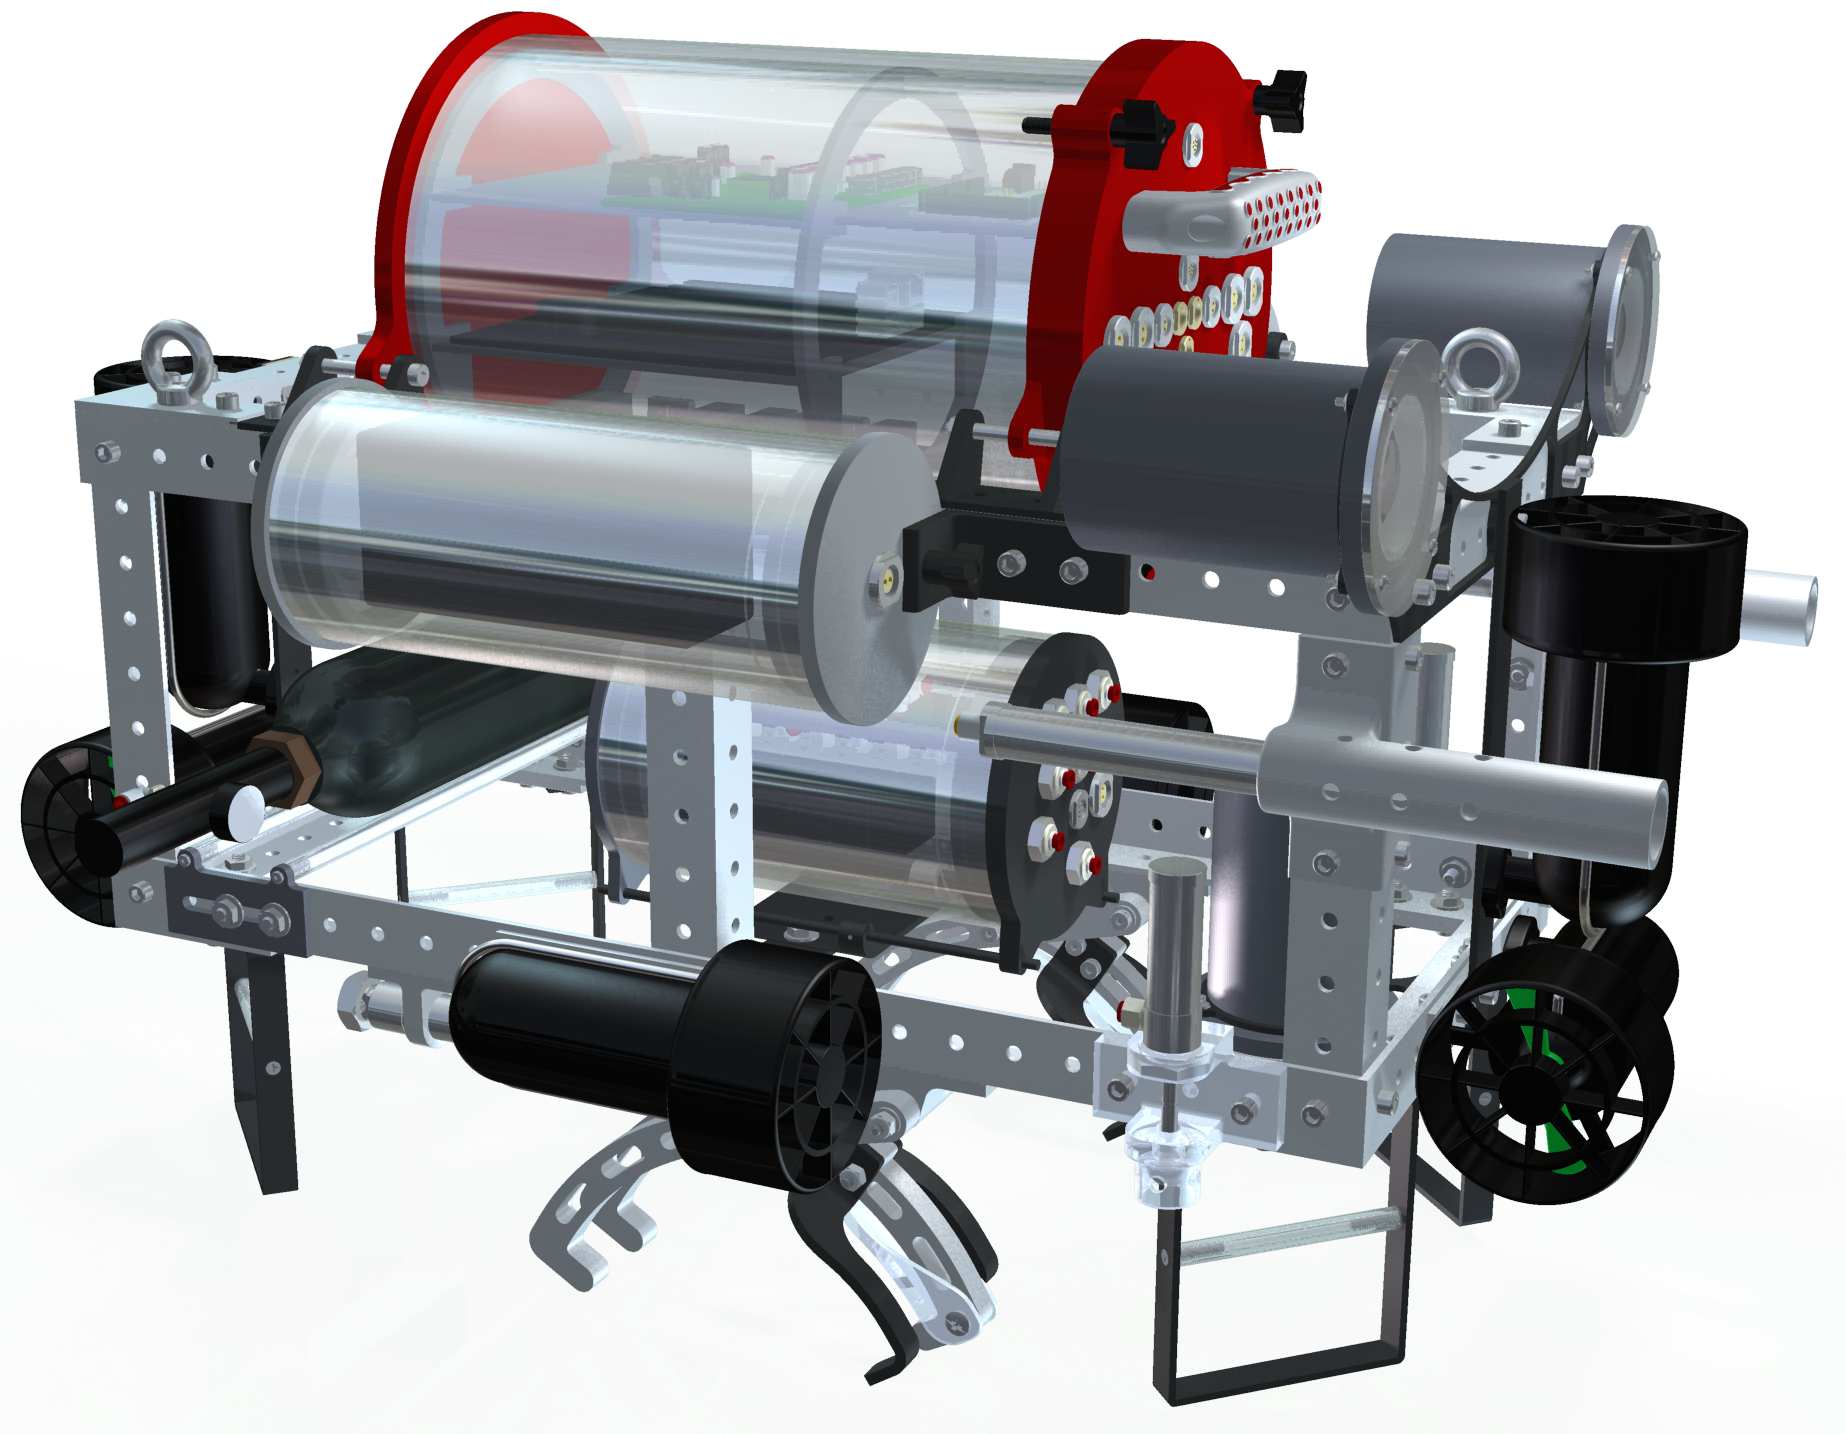 CAD of McGill Robotics AUV - by Michael Elliot King